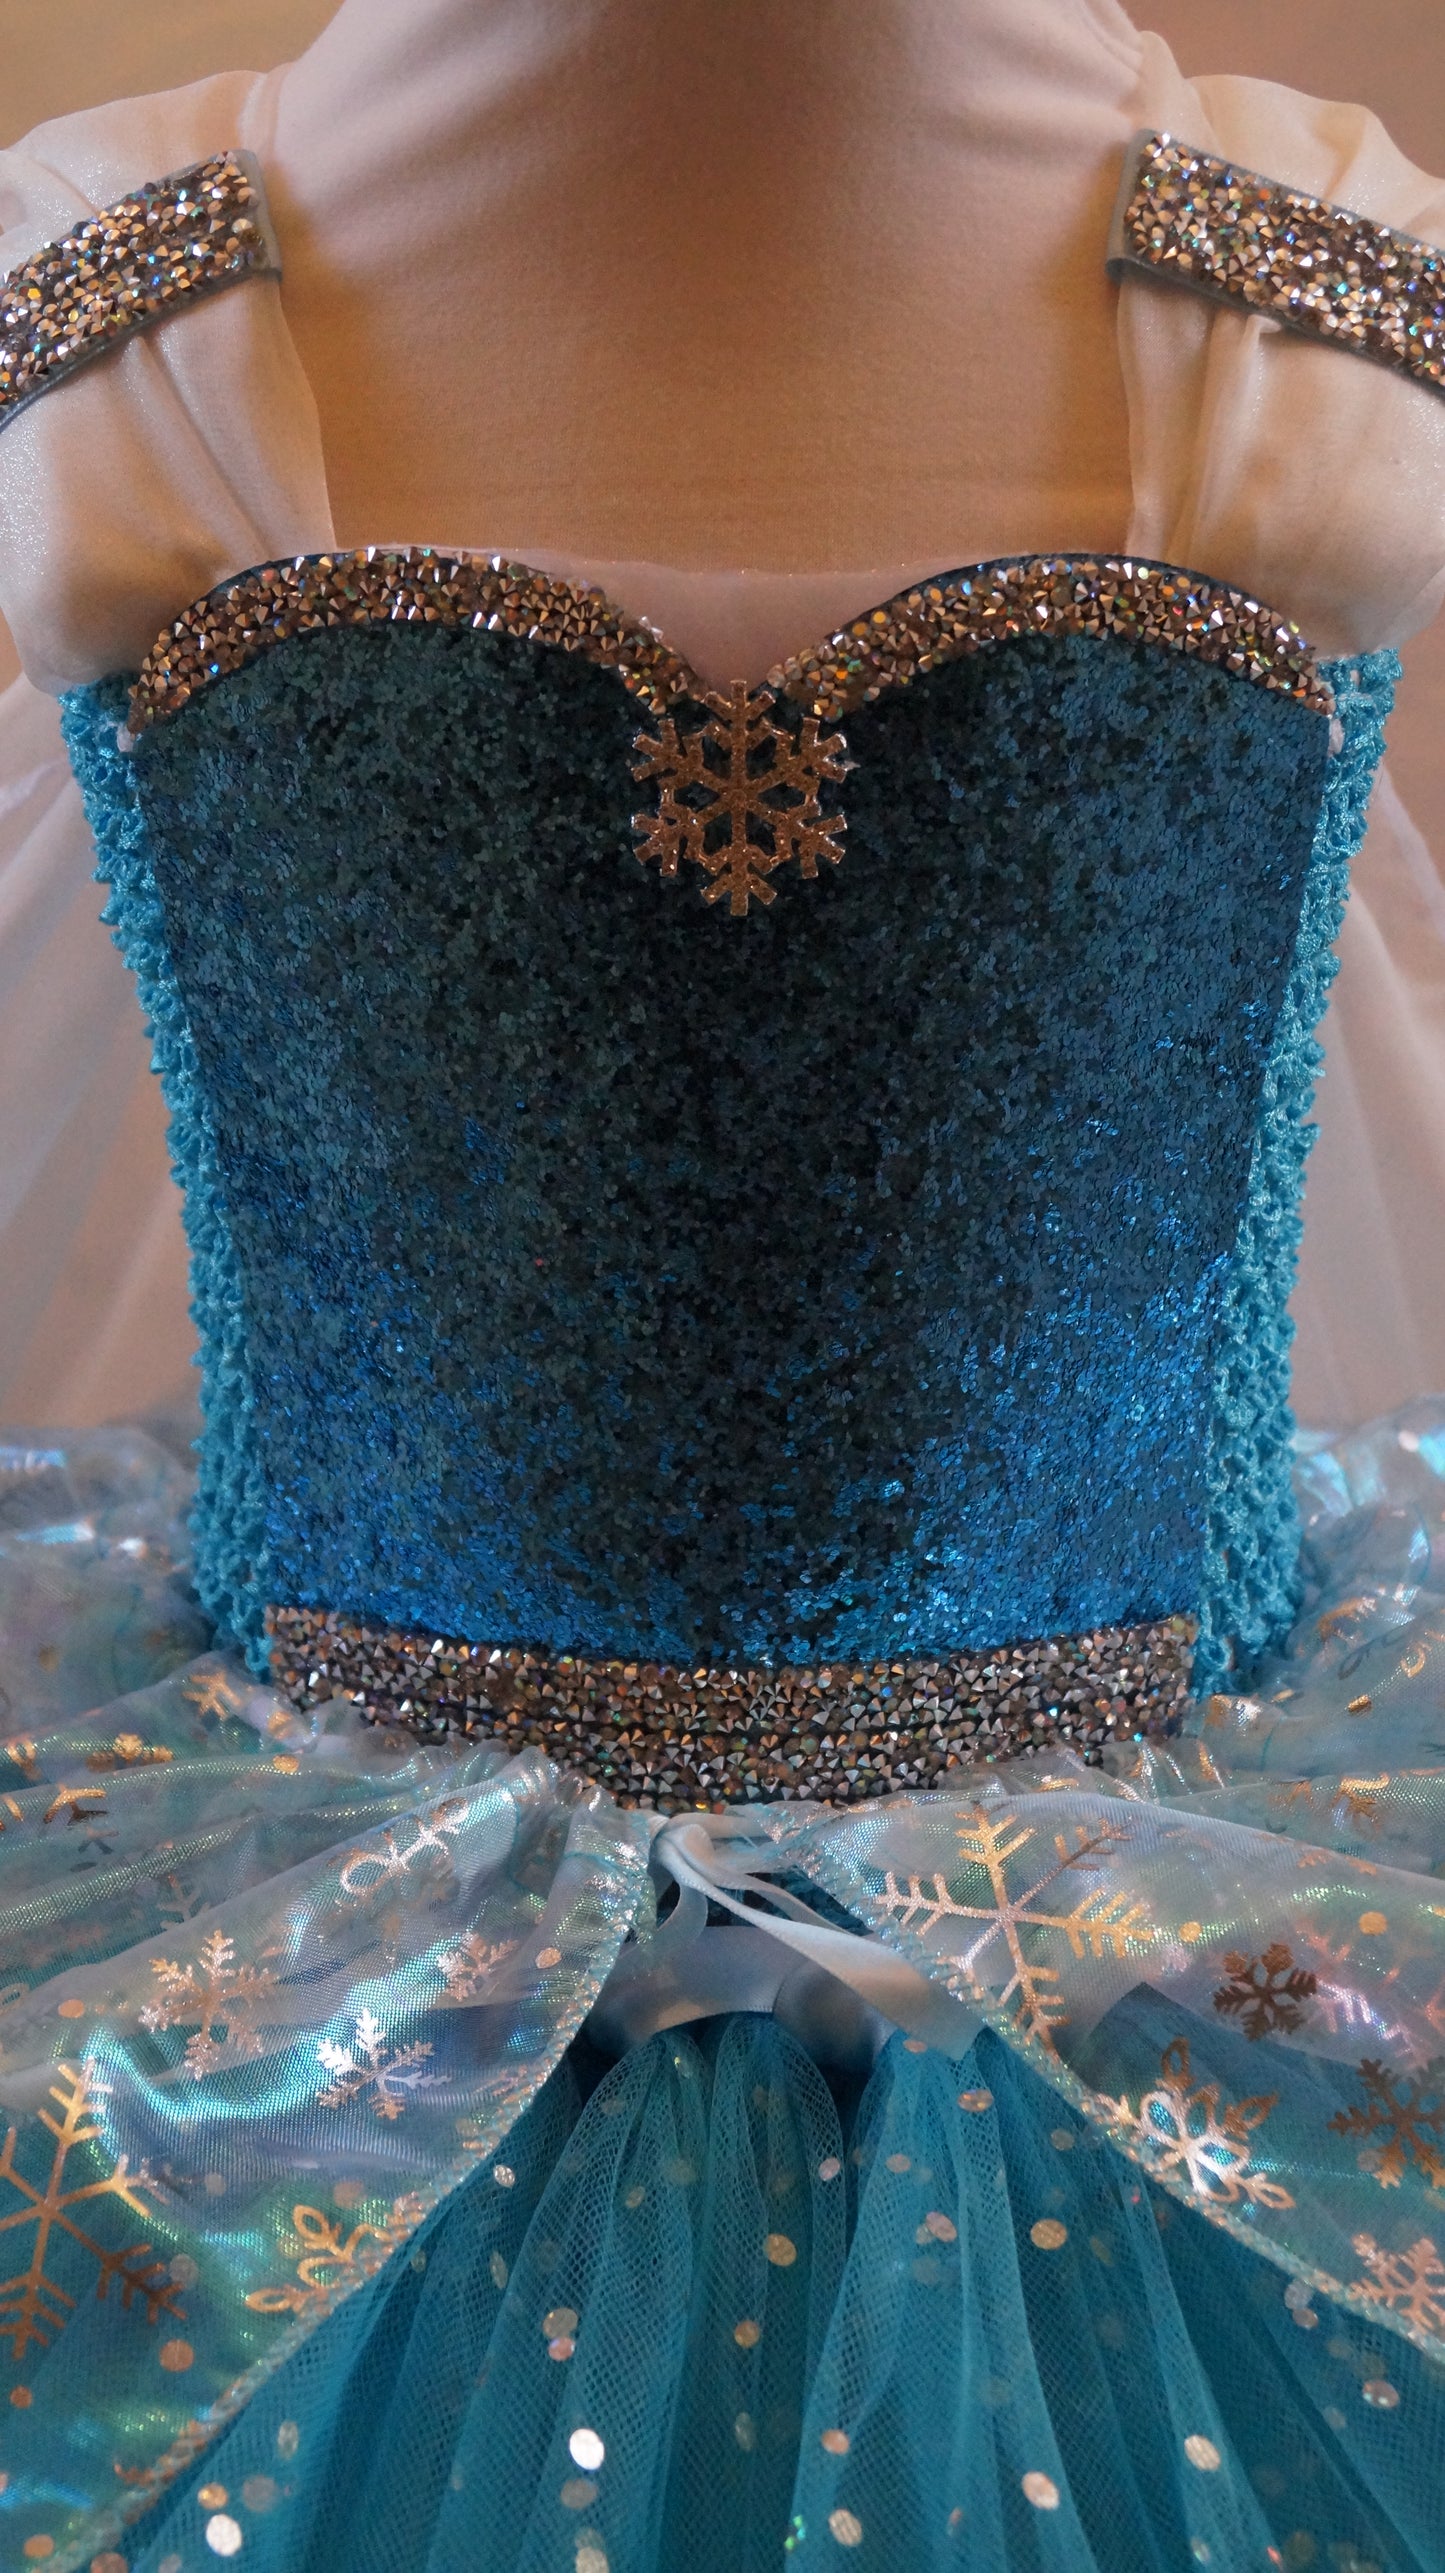 Disney Princess Elsa Frozen Inspired Blue Tutu Dress